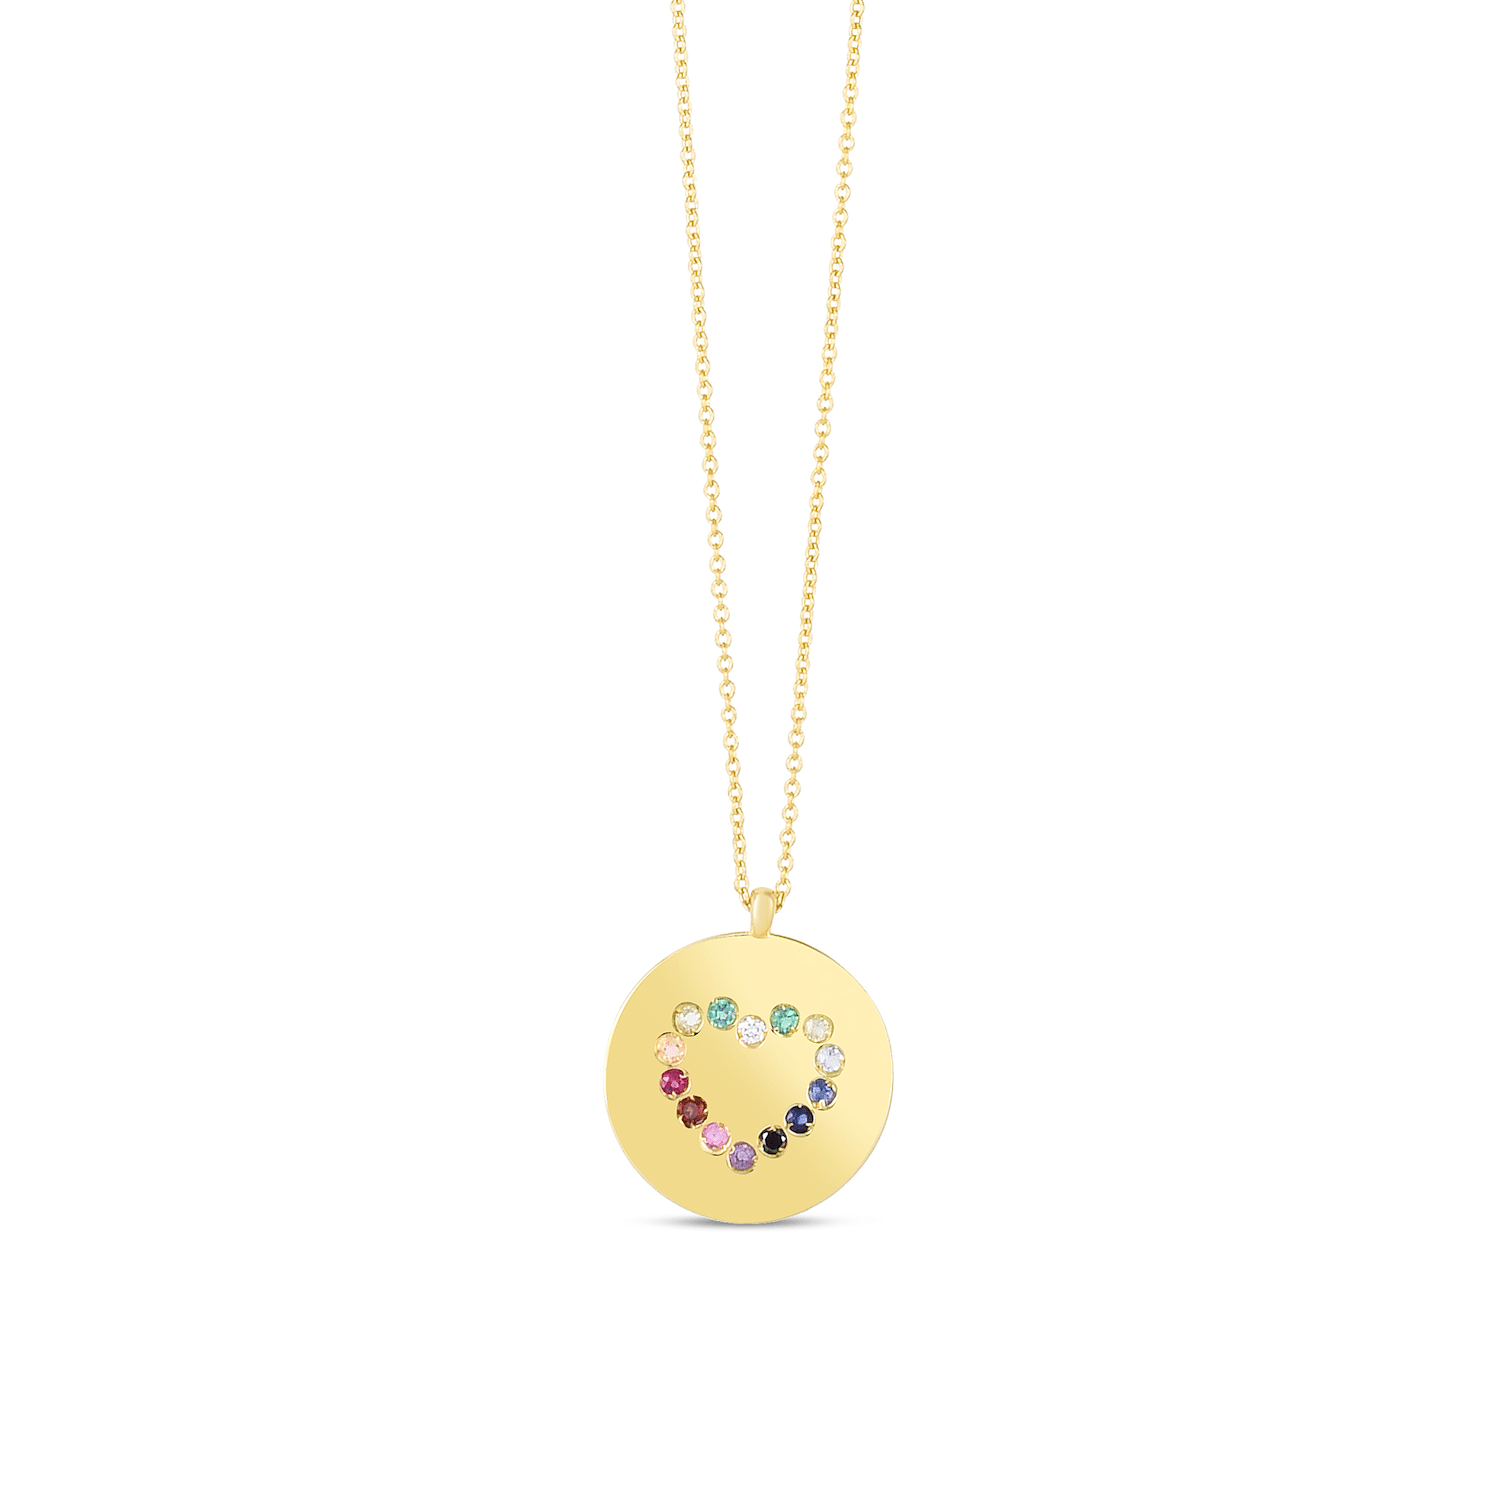 14K Yellow Gold Natural Gemstone Diamond Medallion Heart Pendant Necklace 16-18"